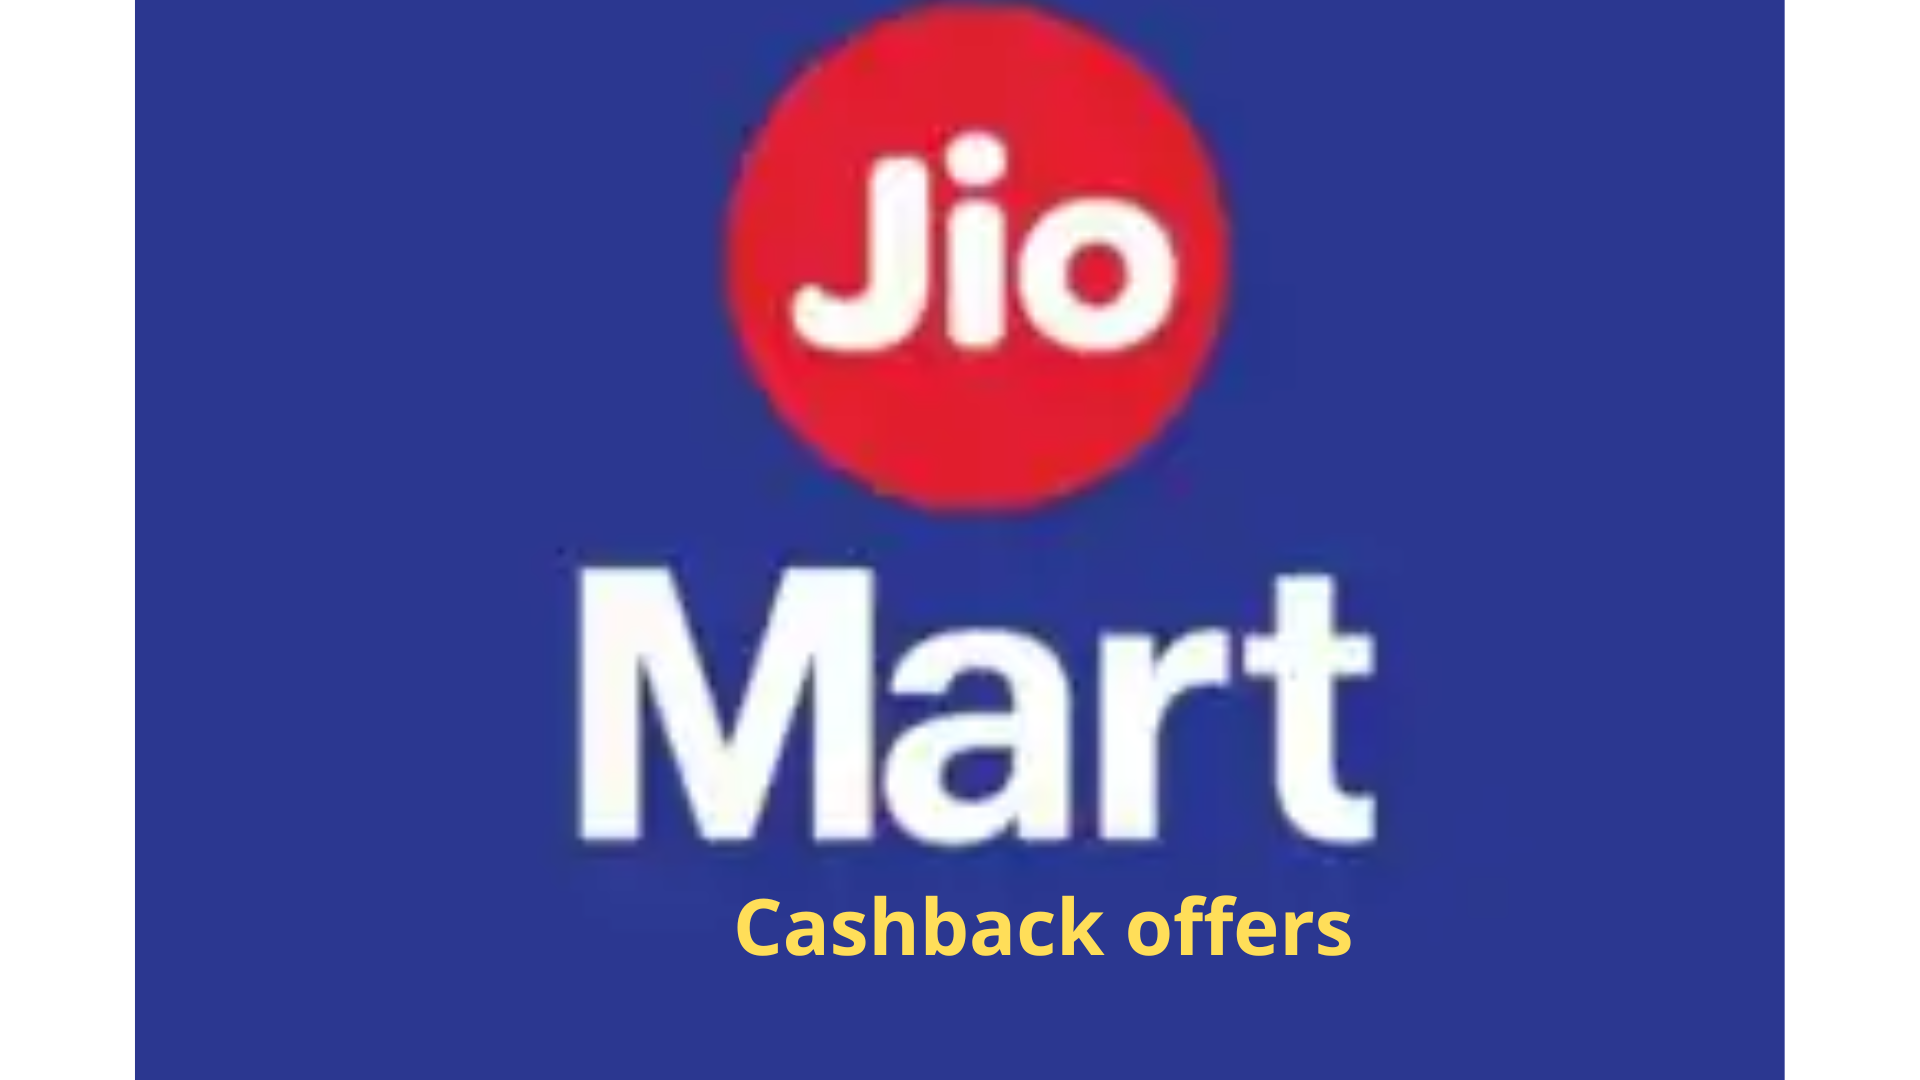 Jiomart Cashback Offers 2022: Get Up to Rs. 750 Cashback on Your Order